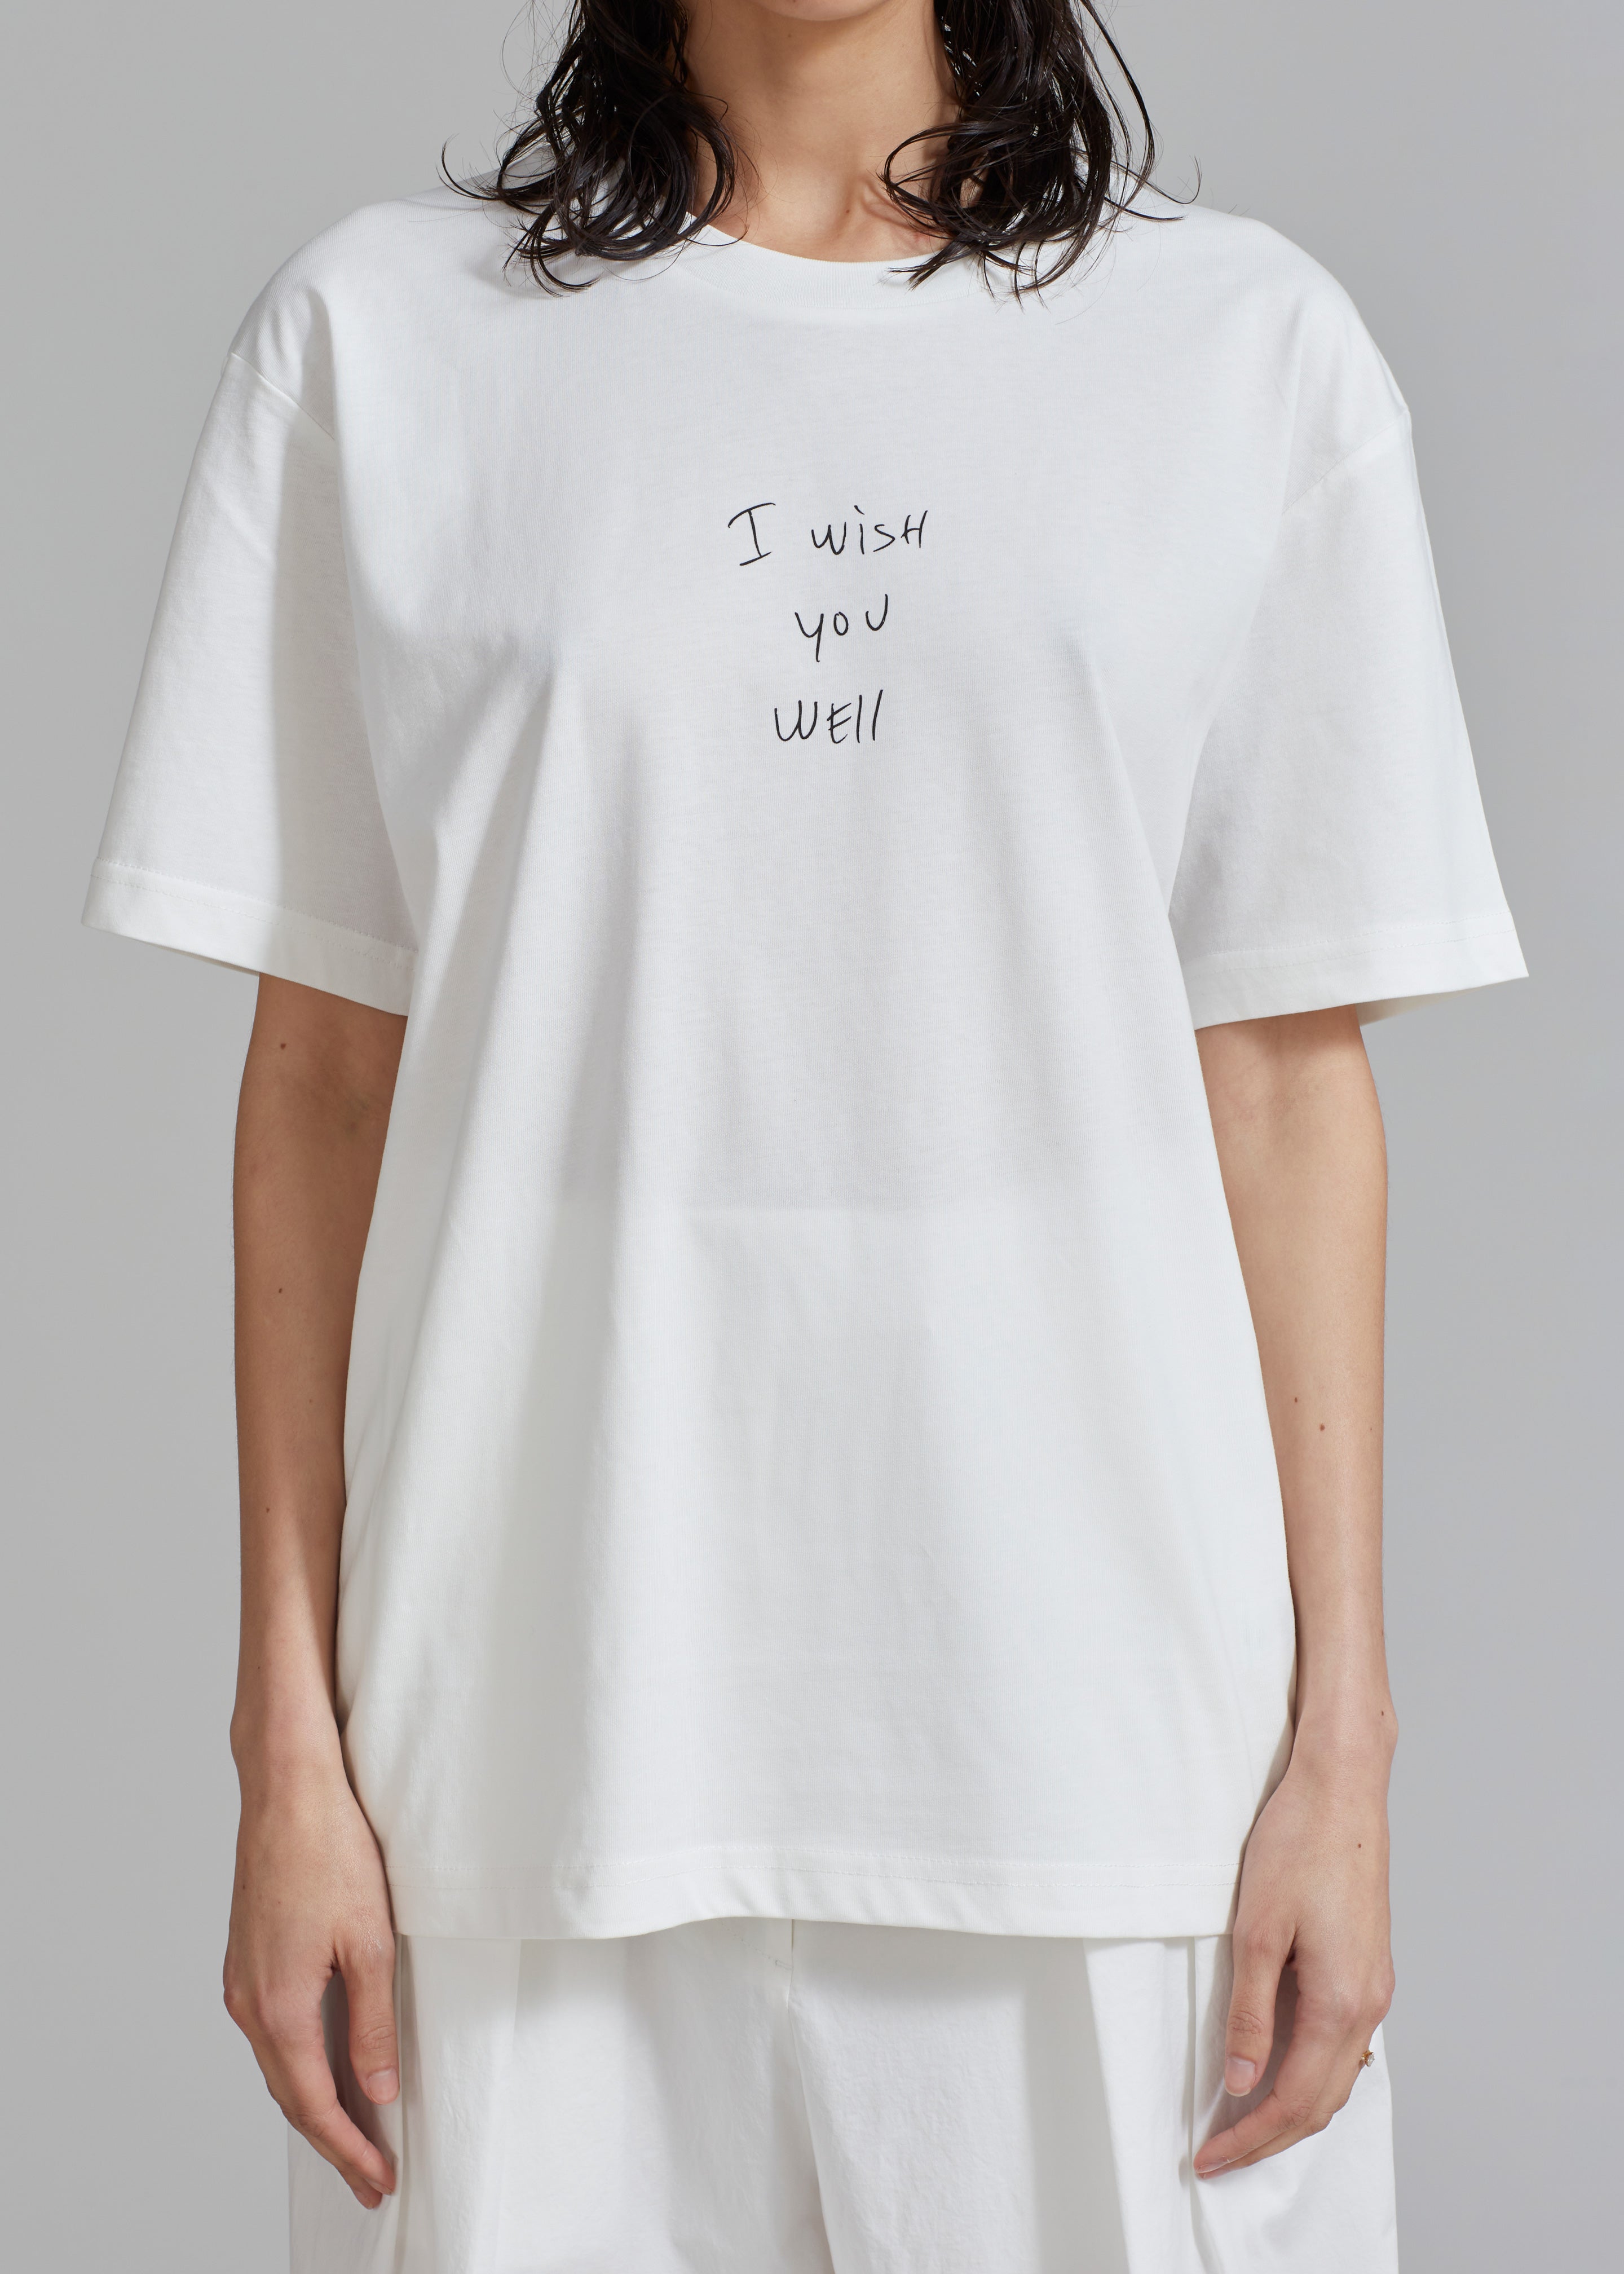 The Frankie Shop x Thomas Lélu Slope T-Shirt - Off White/Black - 6